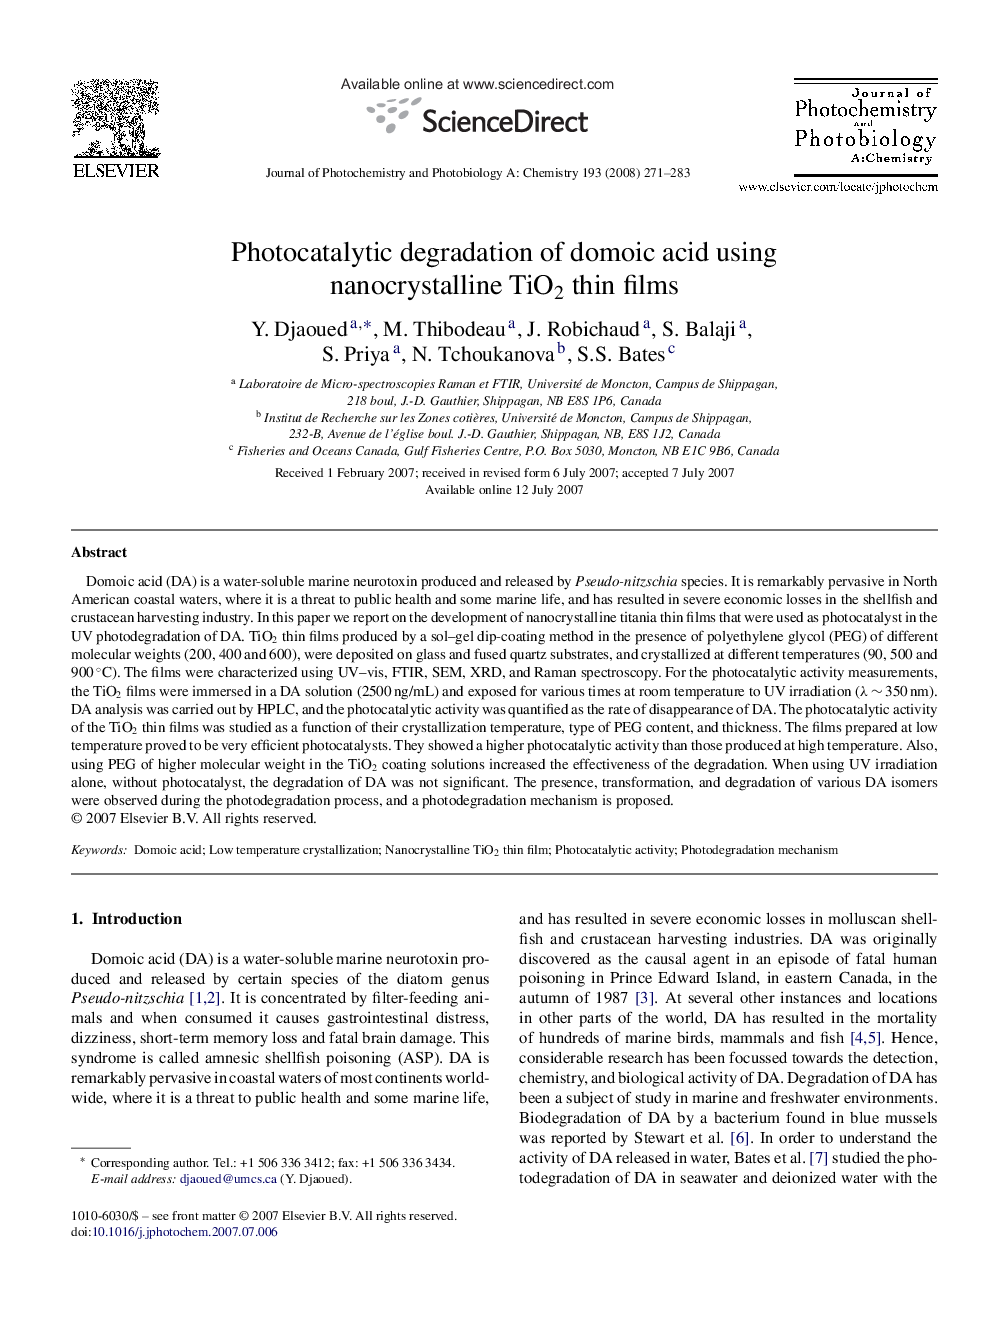 Photocatalytic degradation of domoic acid using nanocrystalline TiO2 thin films